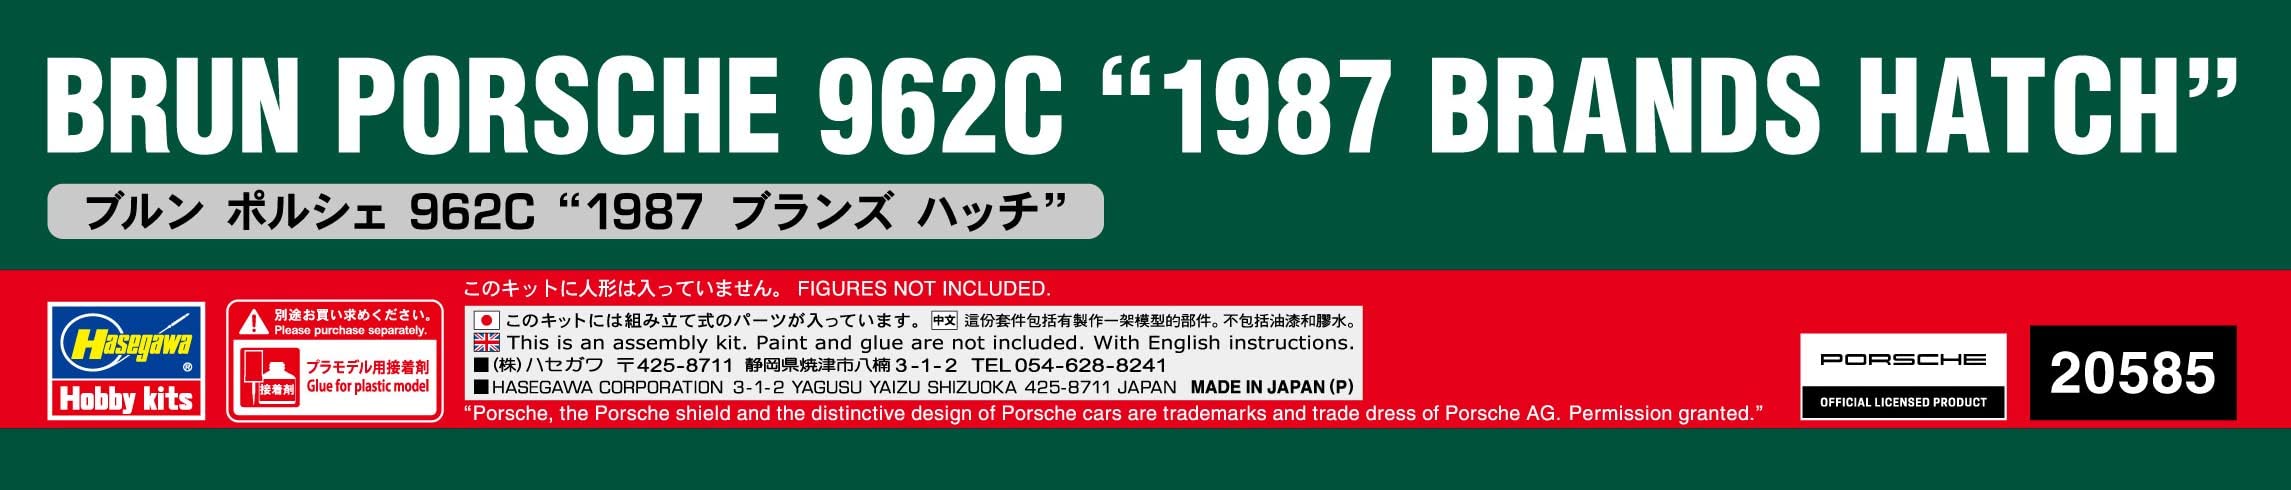 Hasegawa 1/24 scale BRUN PORSCHE 962C 1987 BRANDS HATCH Model kit 20585 NEW_4